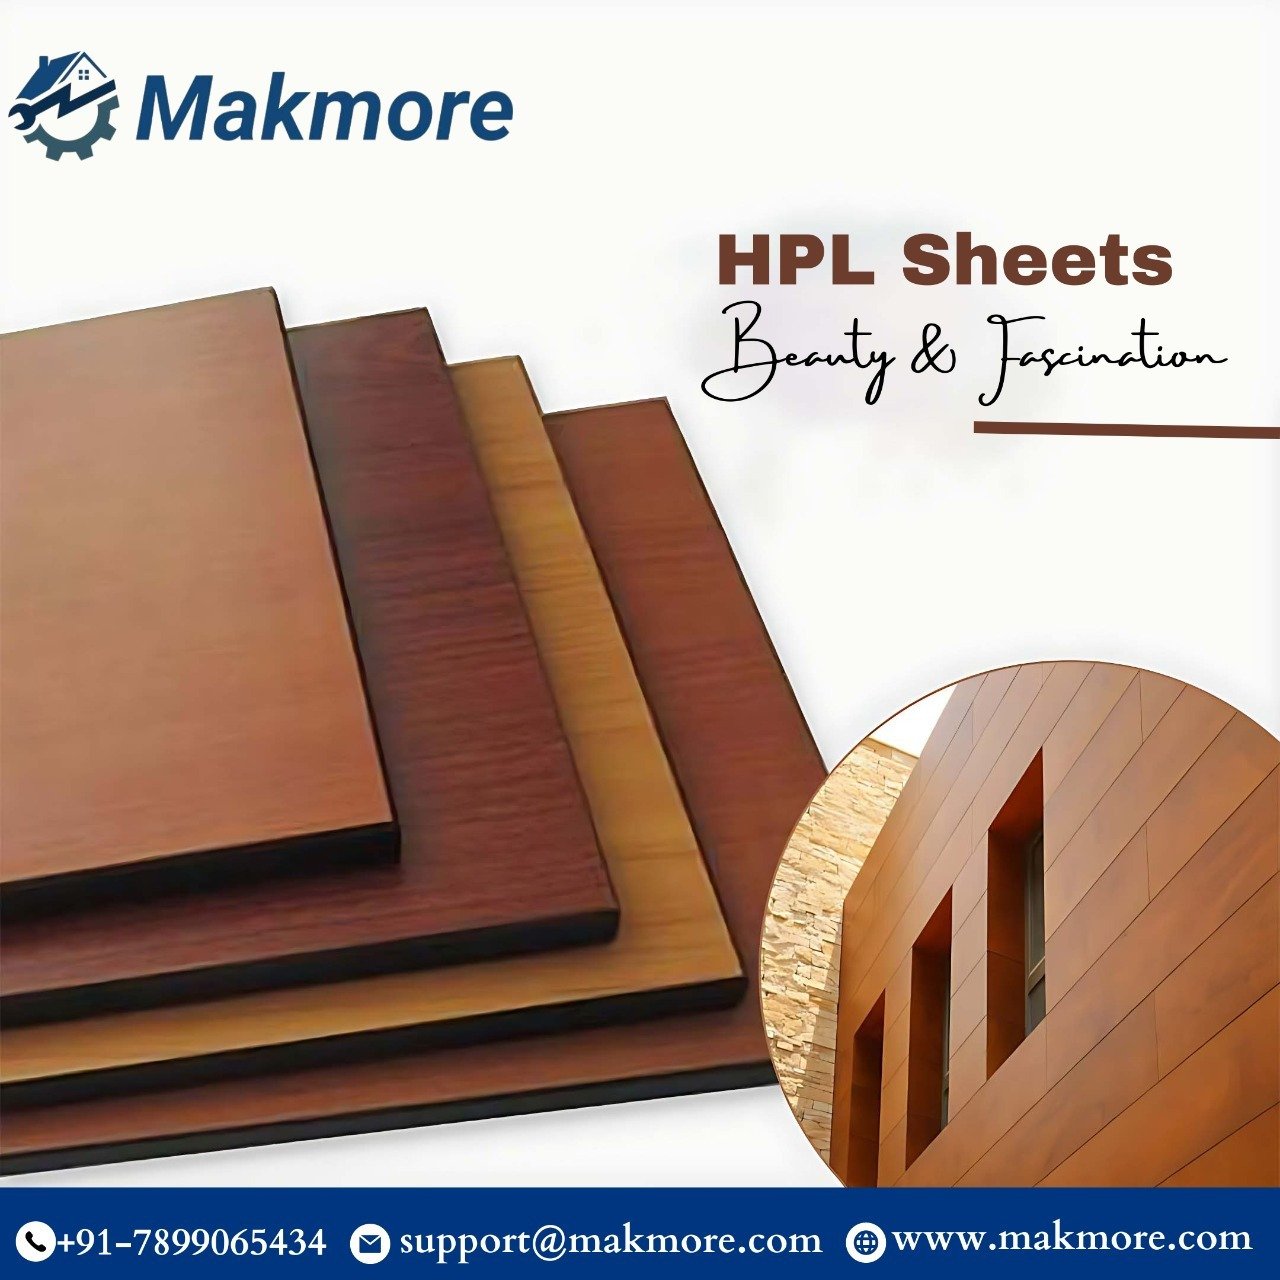 HPL sheet manufacture in Bangalore